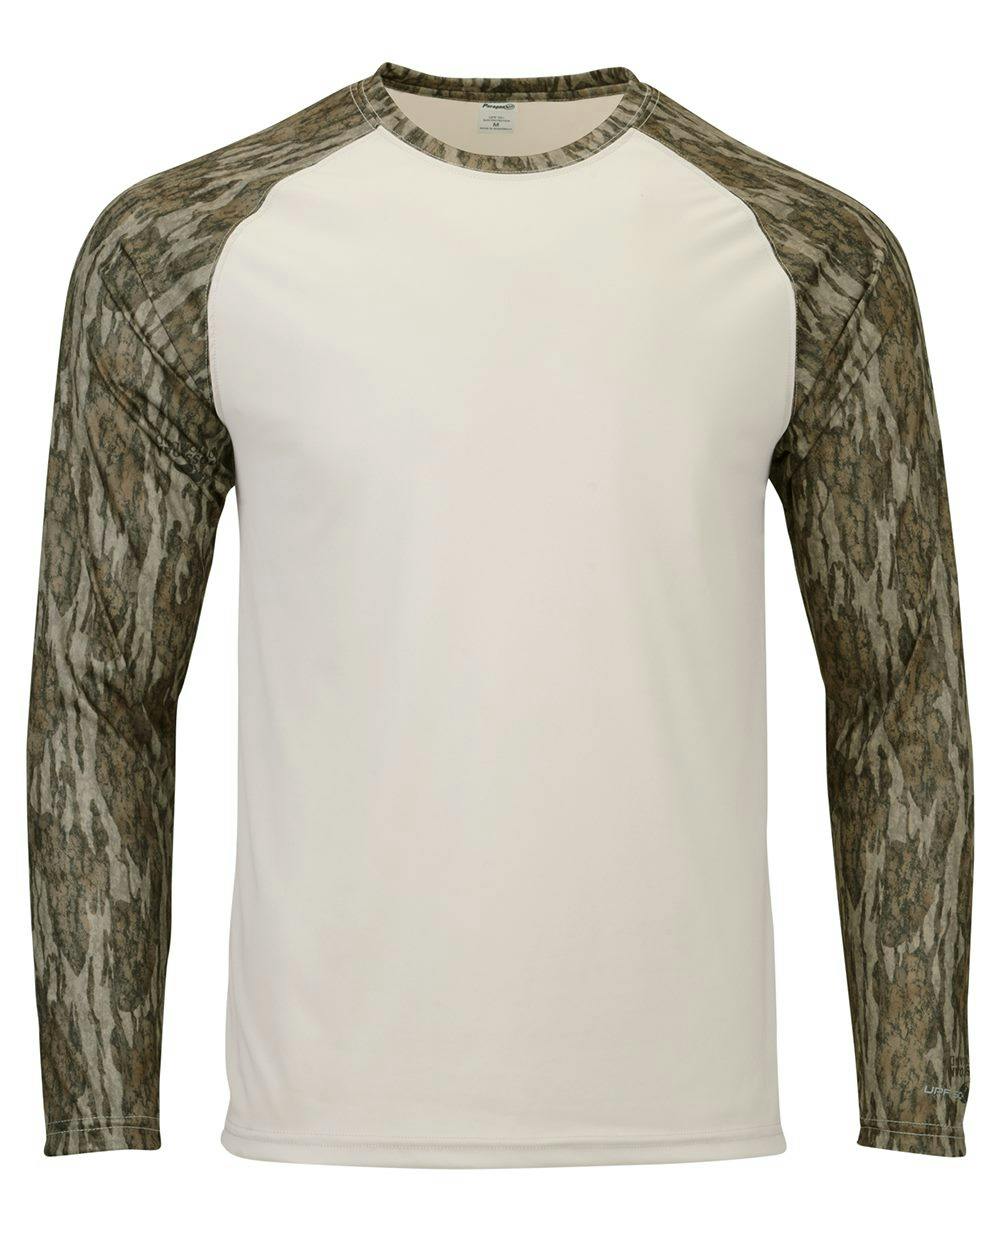 Image for Jackson Mossy Oak Colorblocked Long Sleeve T-Shirt - 236